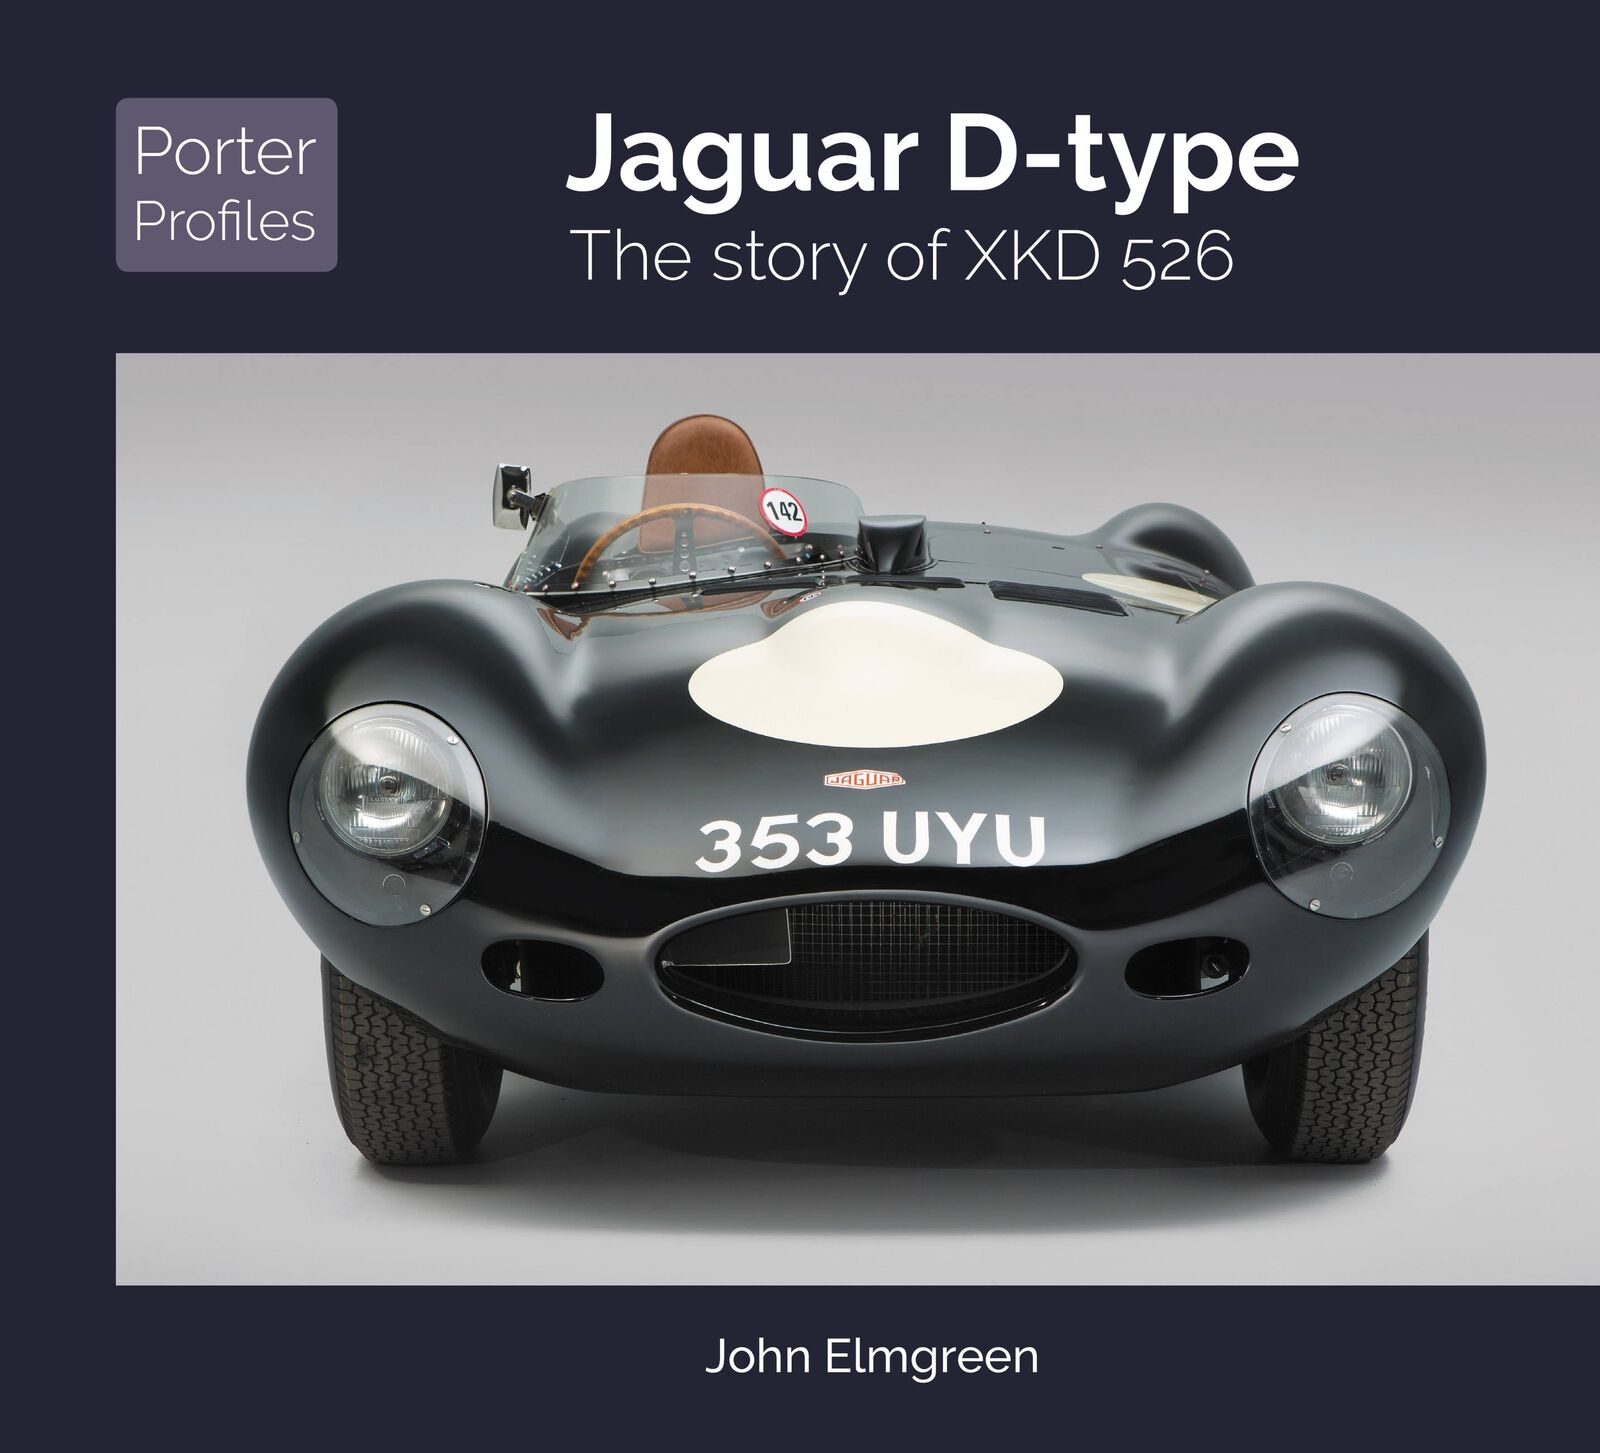 Jaguar D-type Le Mans 24 XKD 526 book Elmgreen Porter